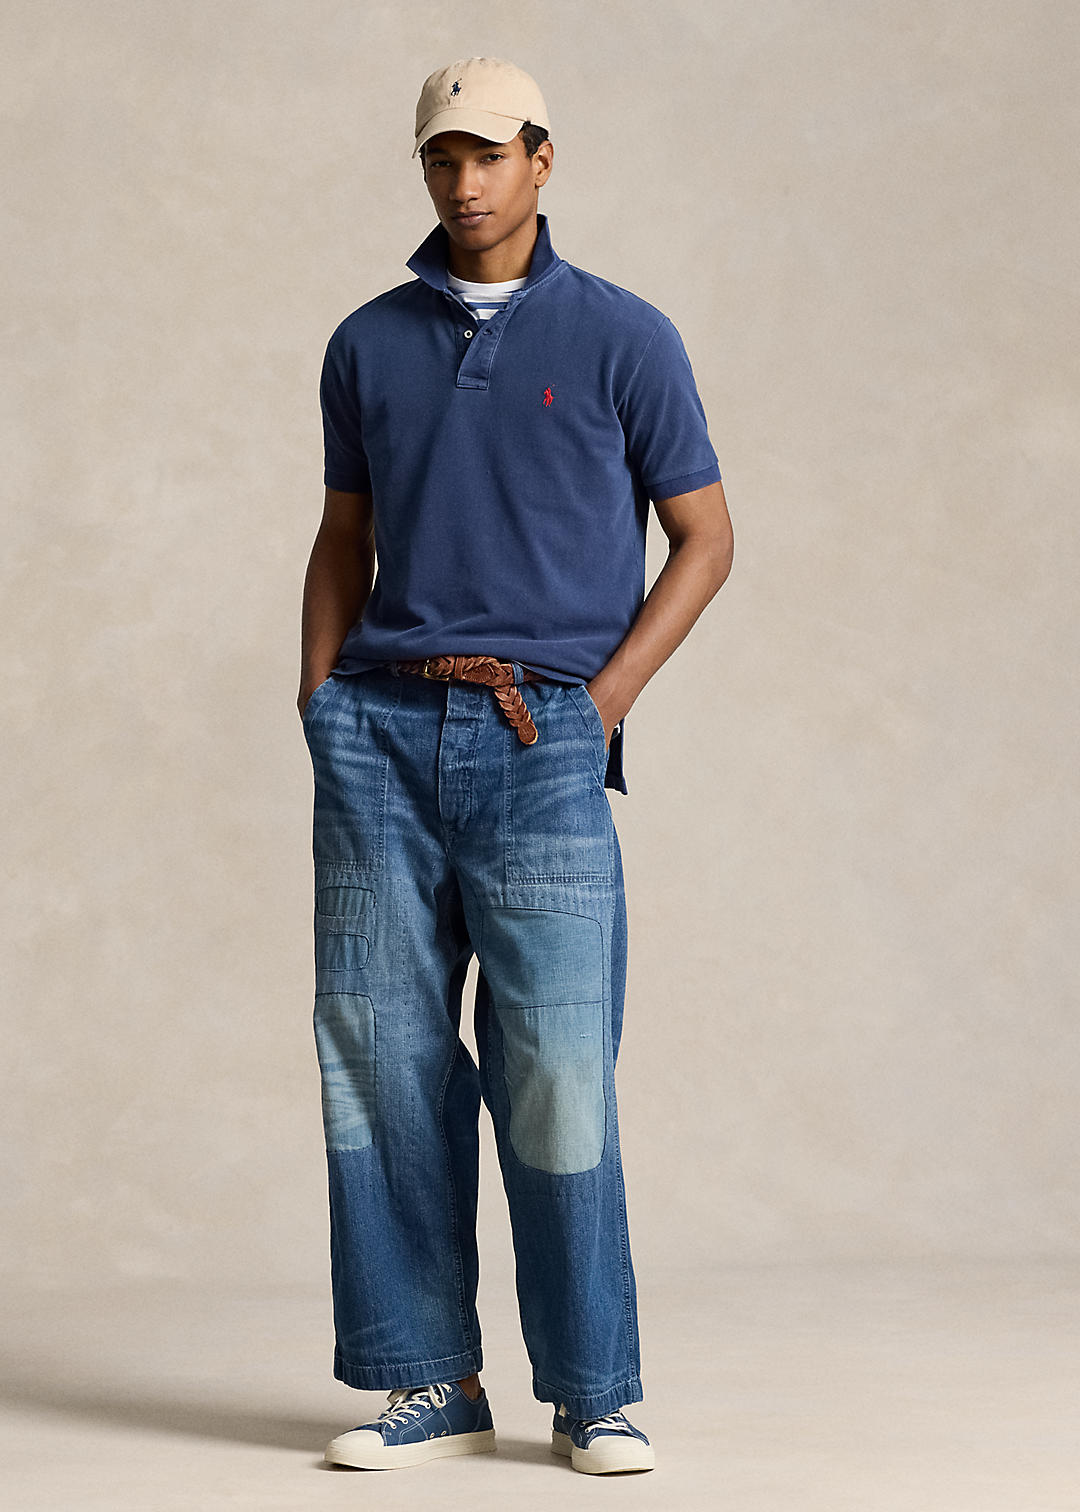 Polo Ralph Lauren Original Fit Mesh Polo Shirt 1